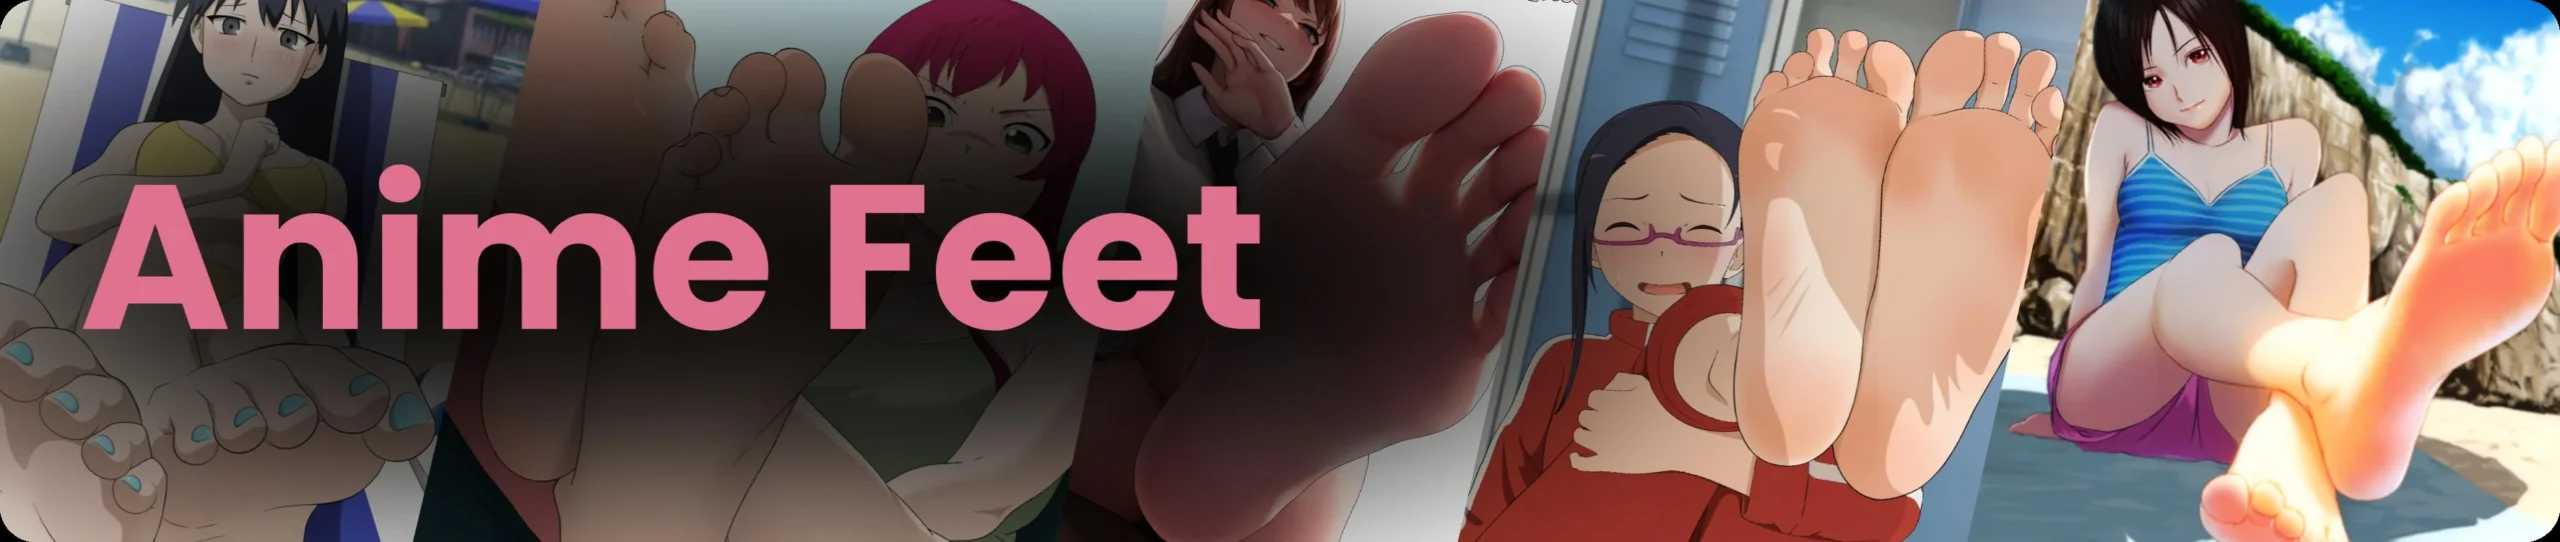 Anime Feet Category Banner